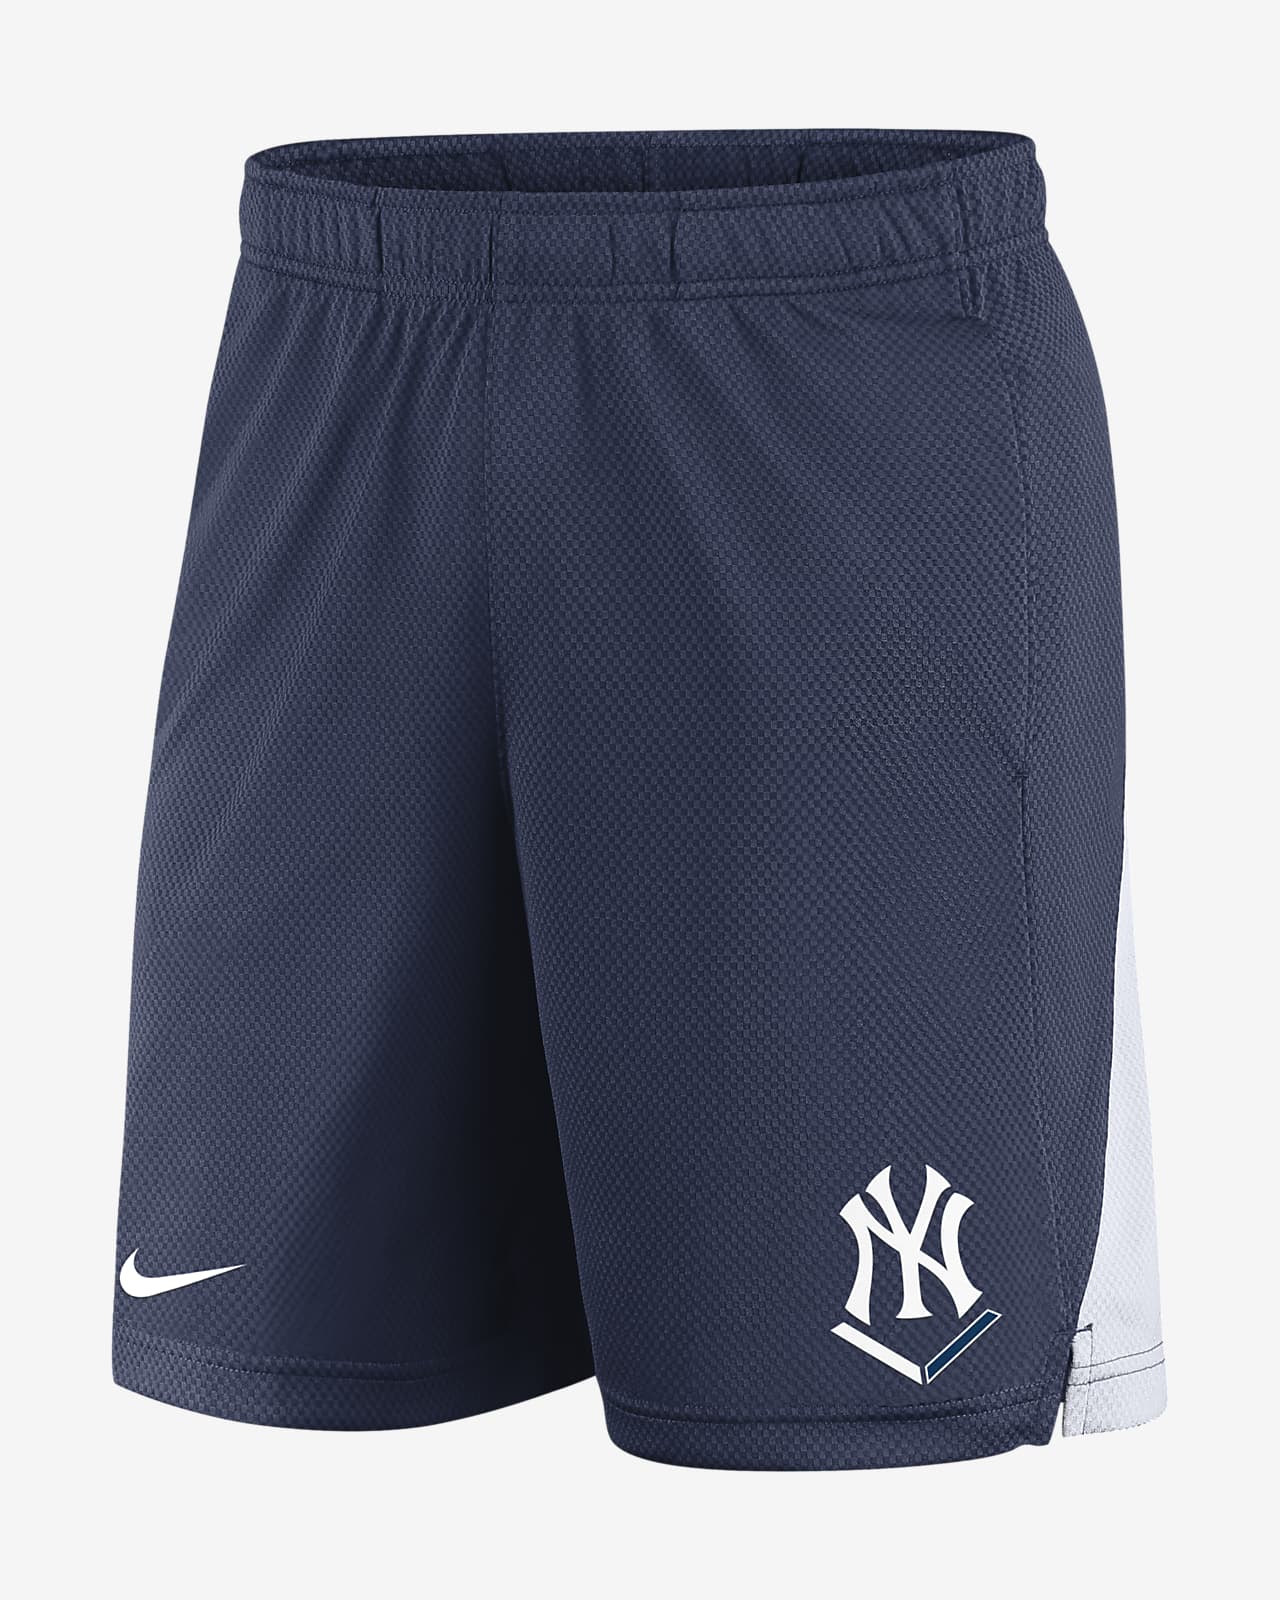 Shorts para hombre Nike Franchise (MLB 